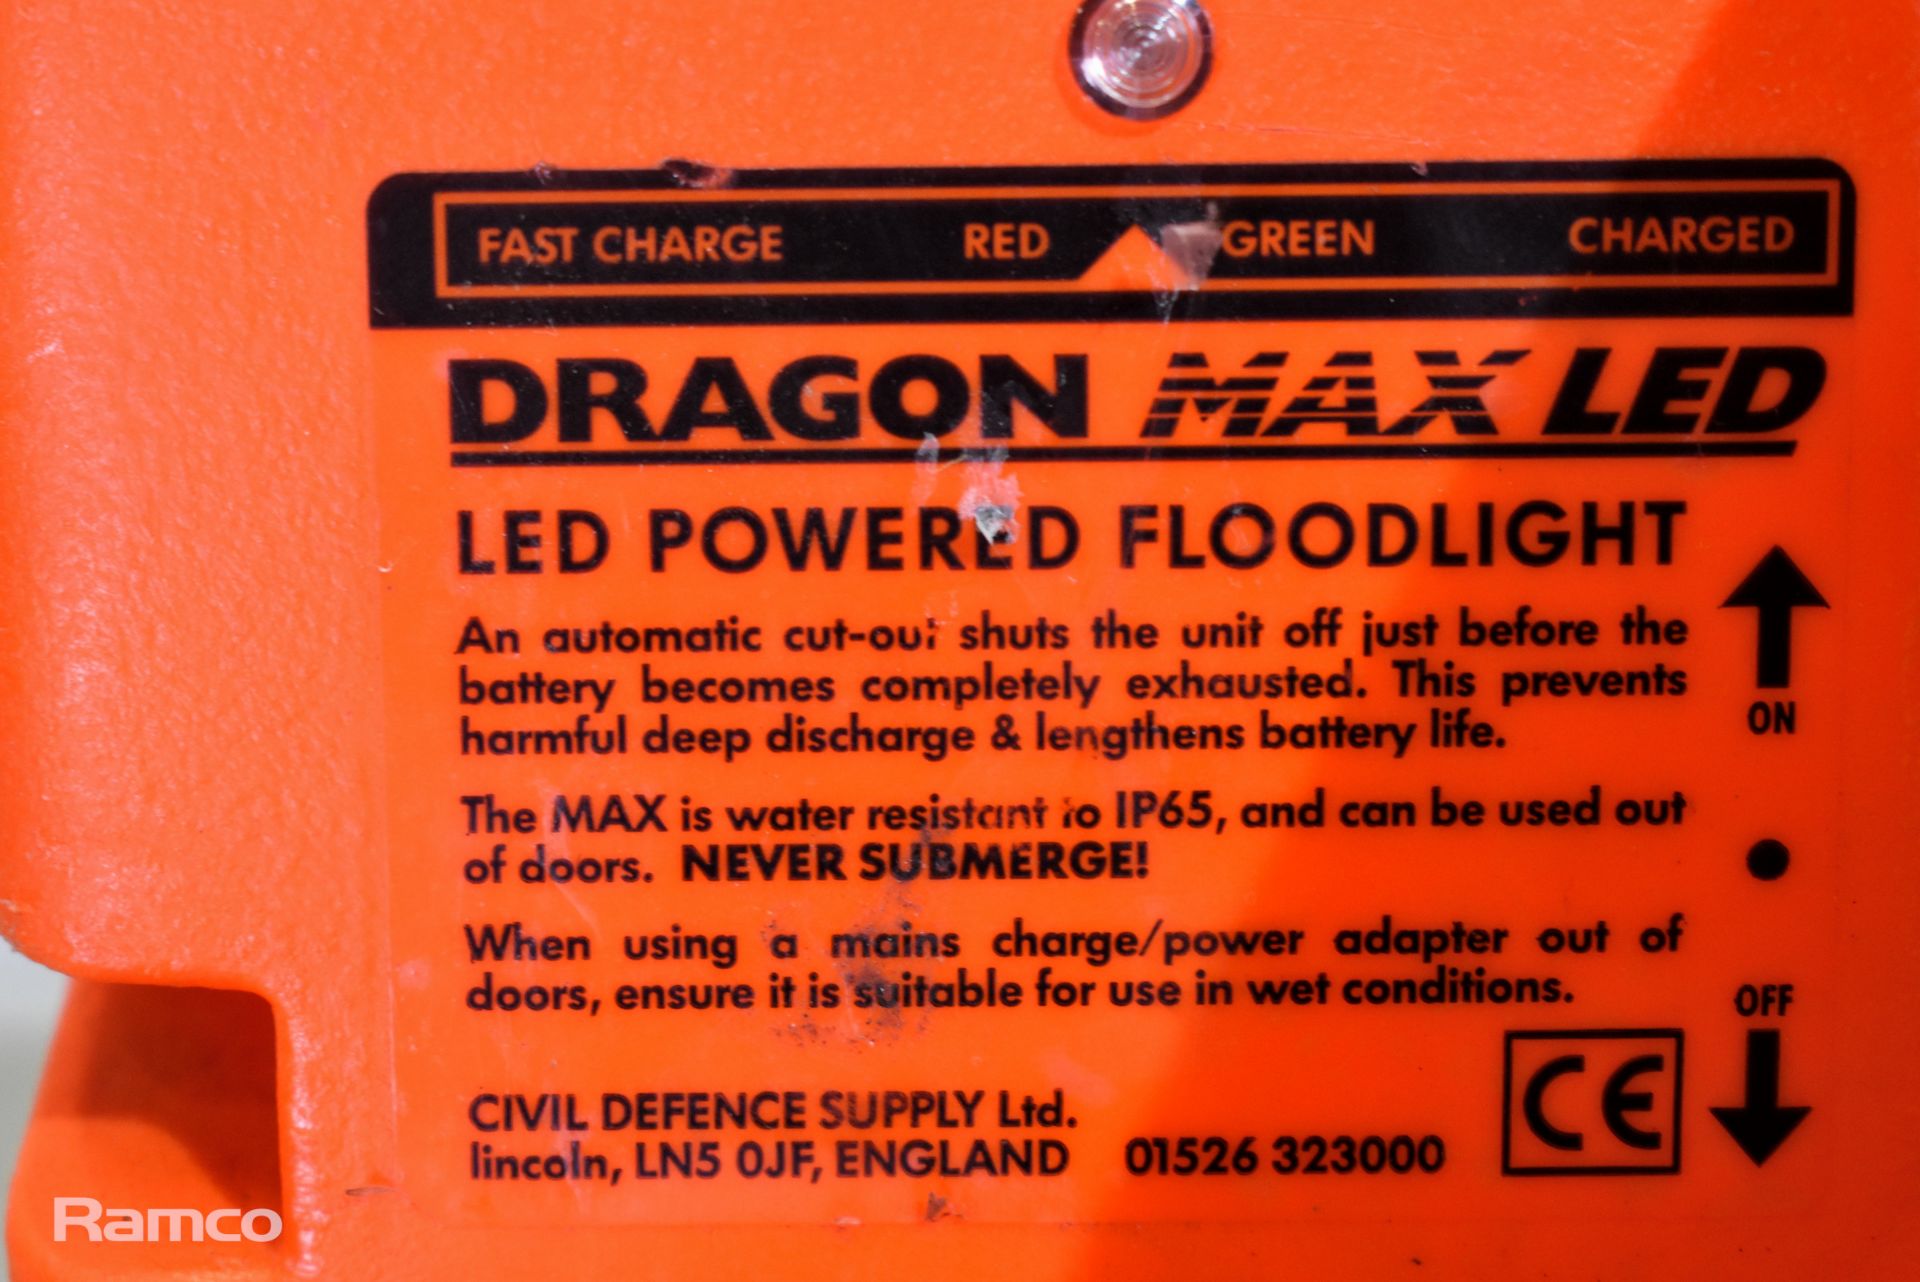 Dragon Max LED floodlight - 24V DC input - Image 5 of 5